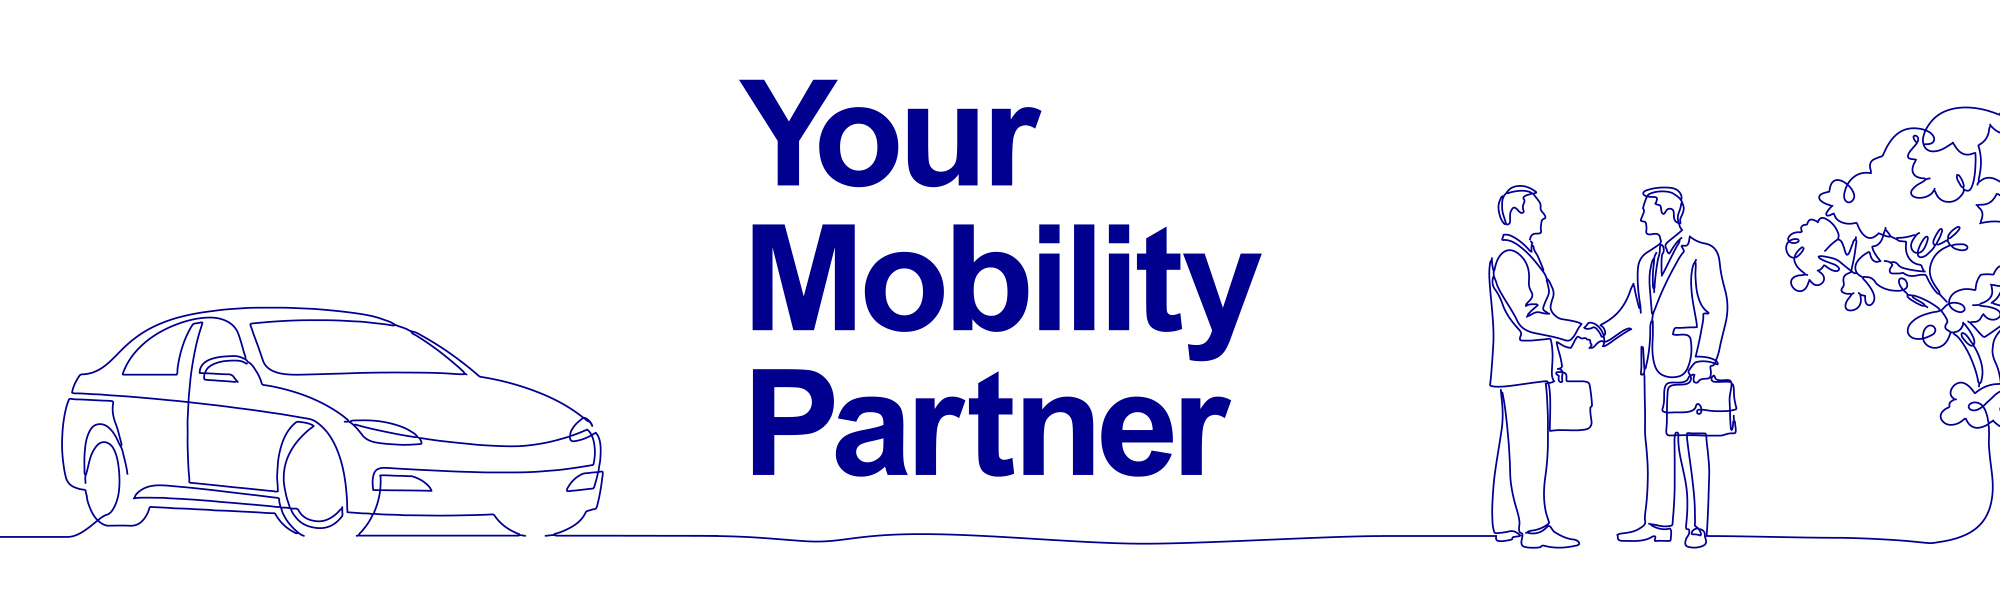 Your Mobility Partner：くるまと人が一筆書きの線でつながるイラスト